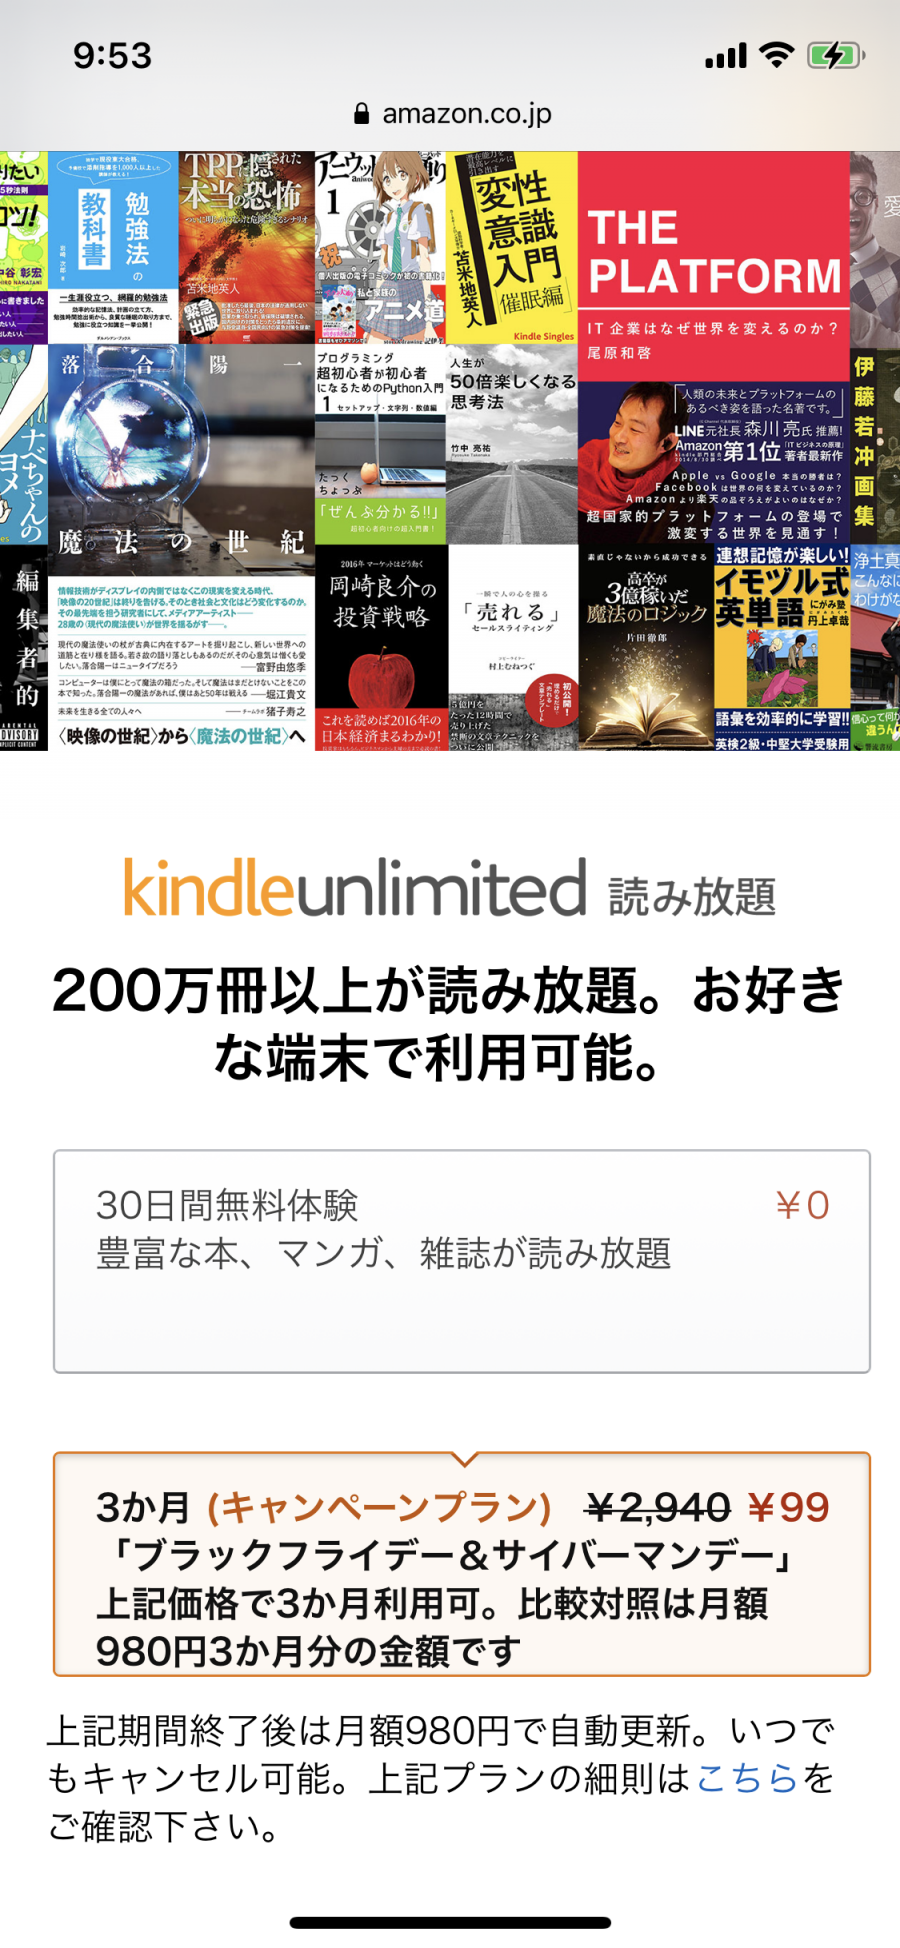 Kindle Unlimited キャンペーン対象者の登録画面